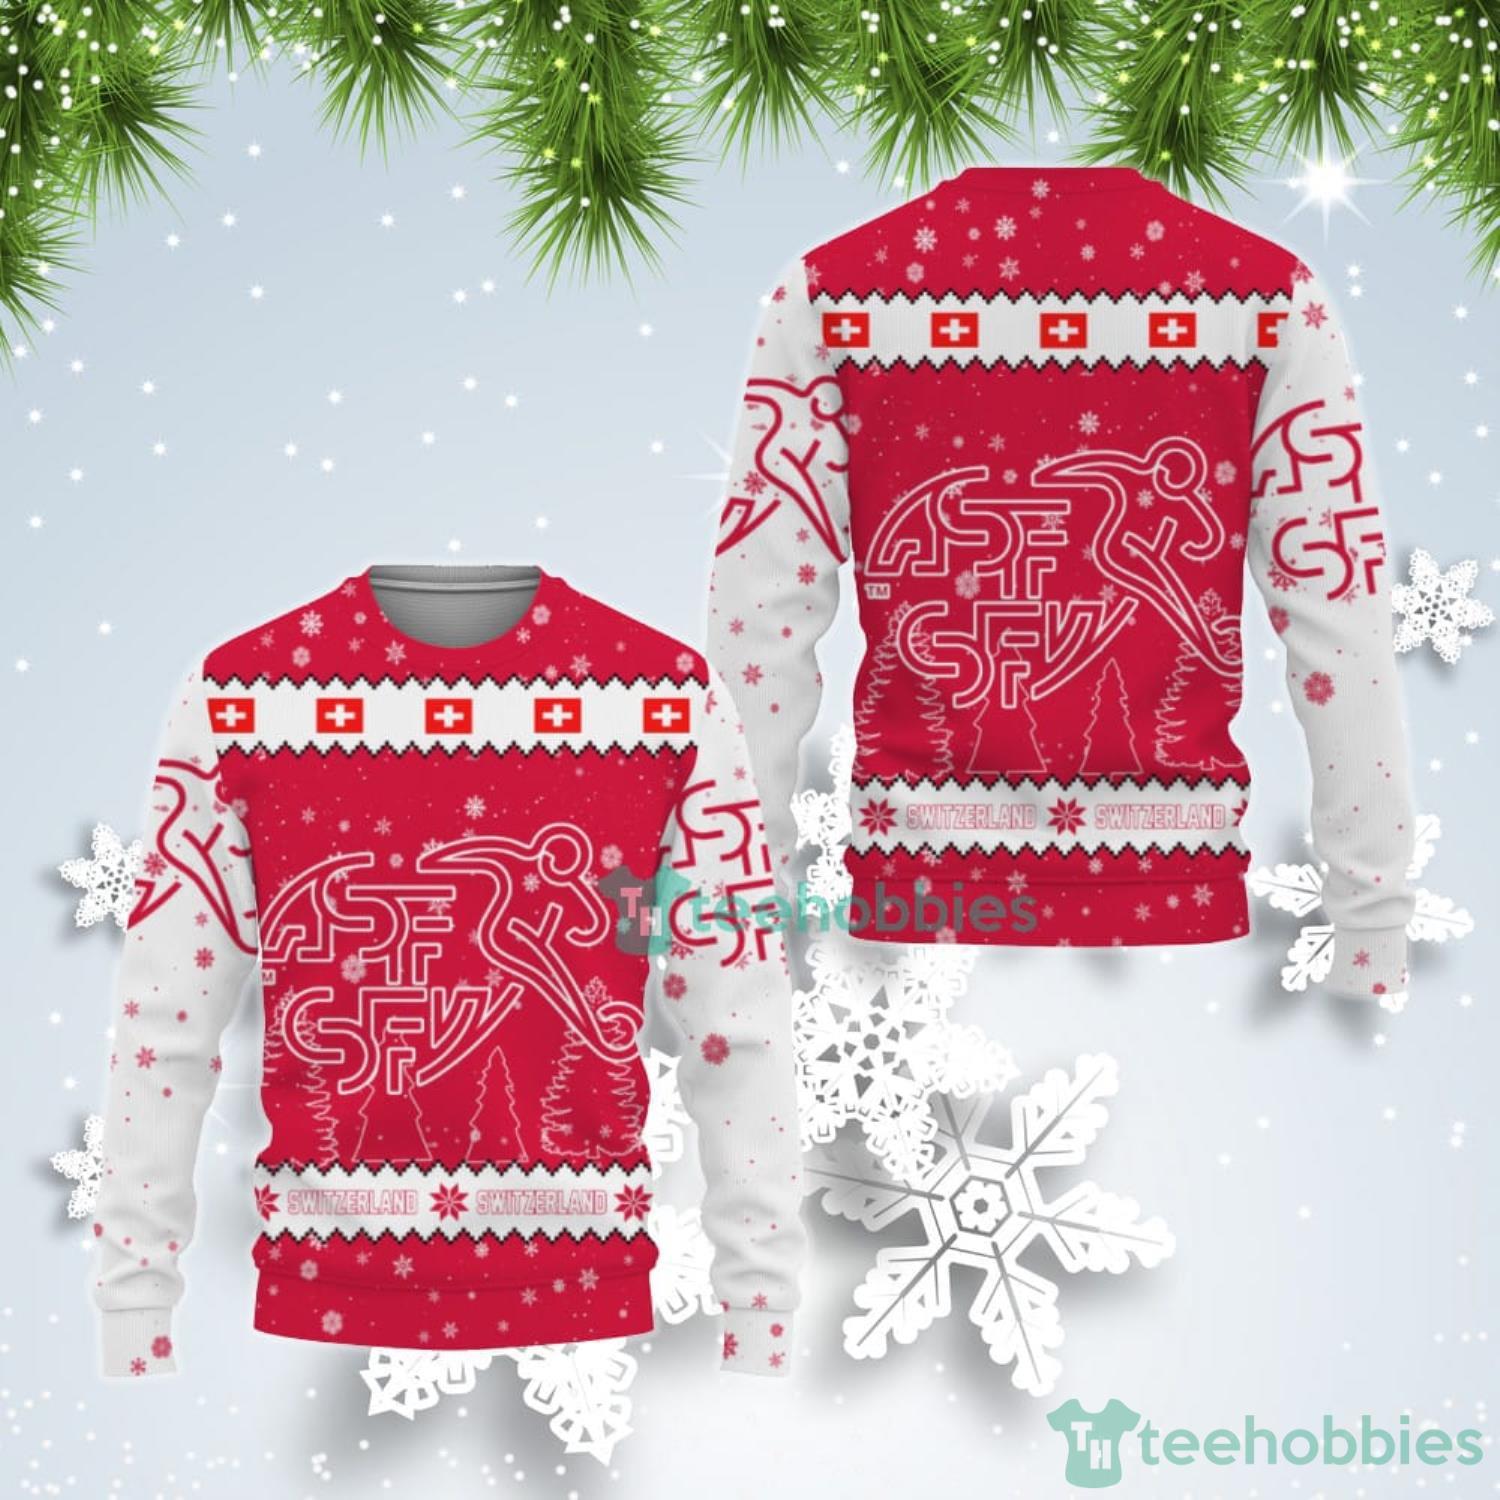 Switzerland National Soccer Team Qatar World Cup 2022 Winter Season Ugly Christmas Sweater Product Photo 1